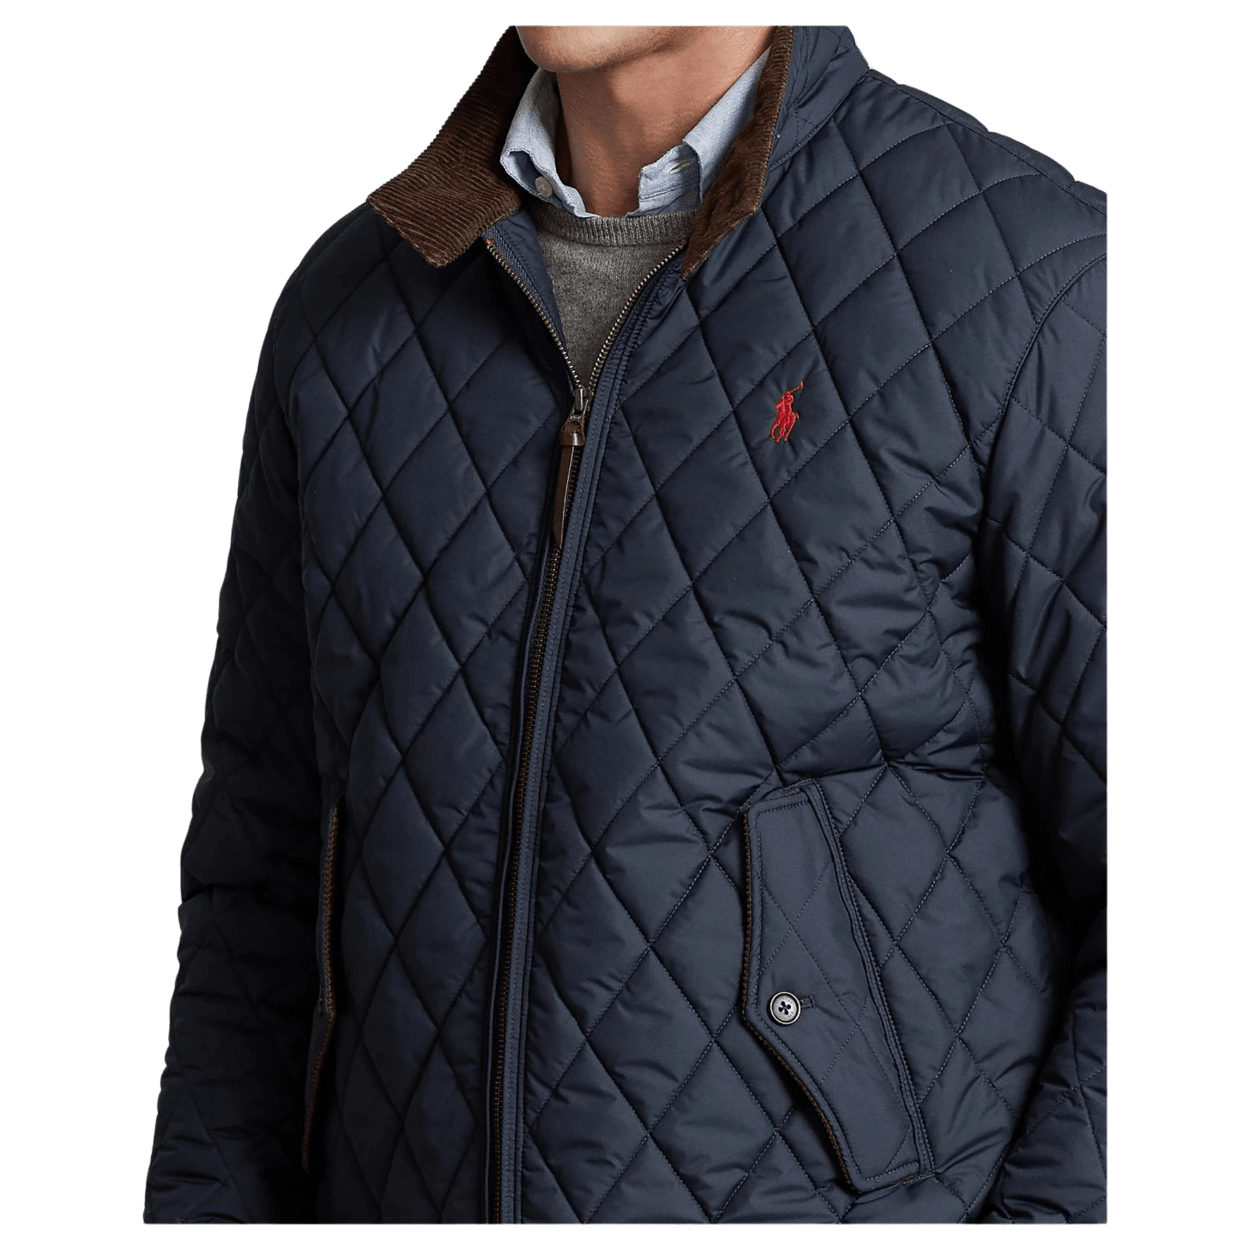 Children Polo Ralph Lauren quilted Jacket Corduroy collar Navy xl(16)